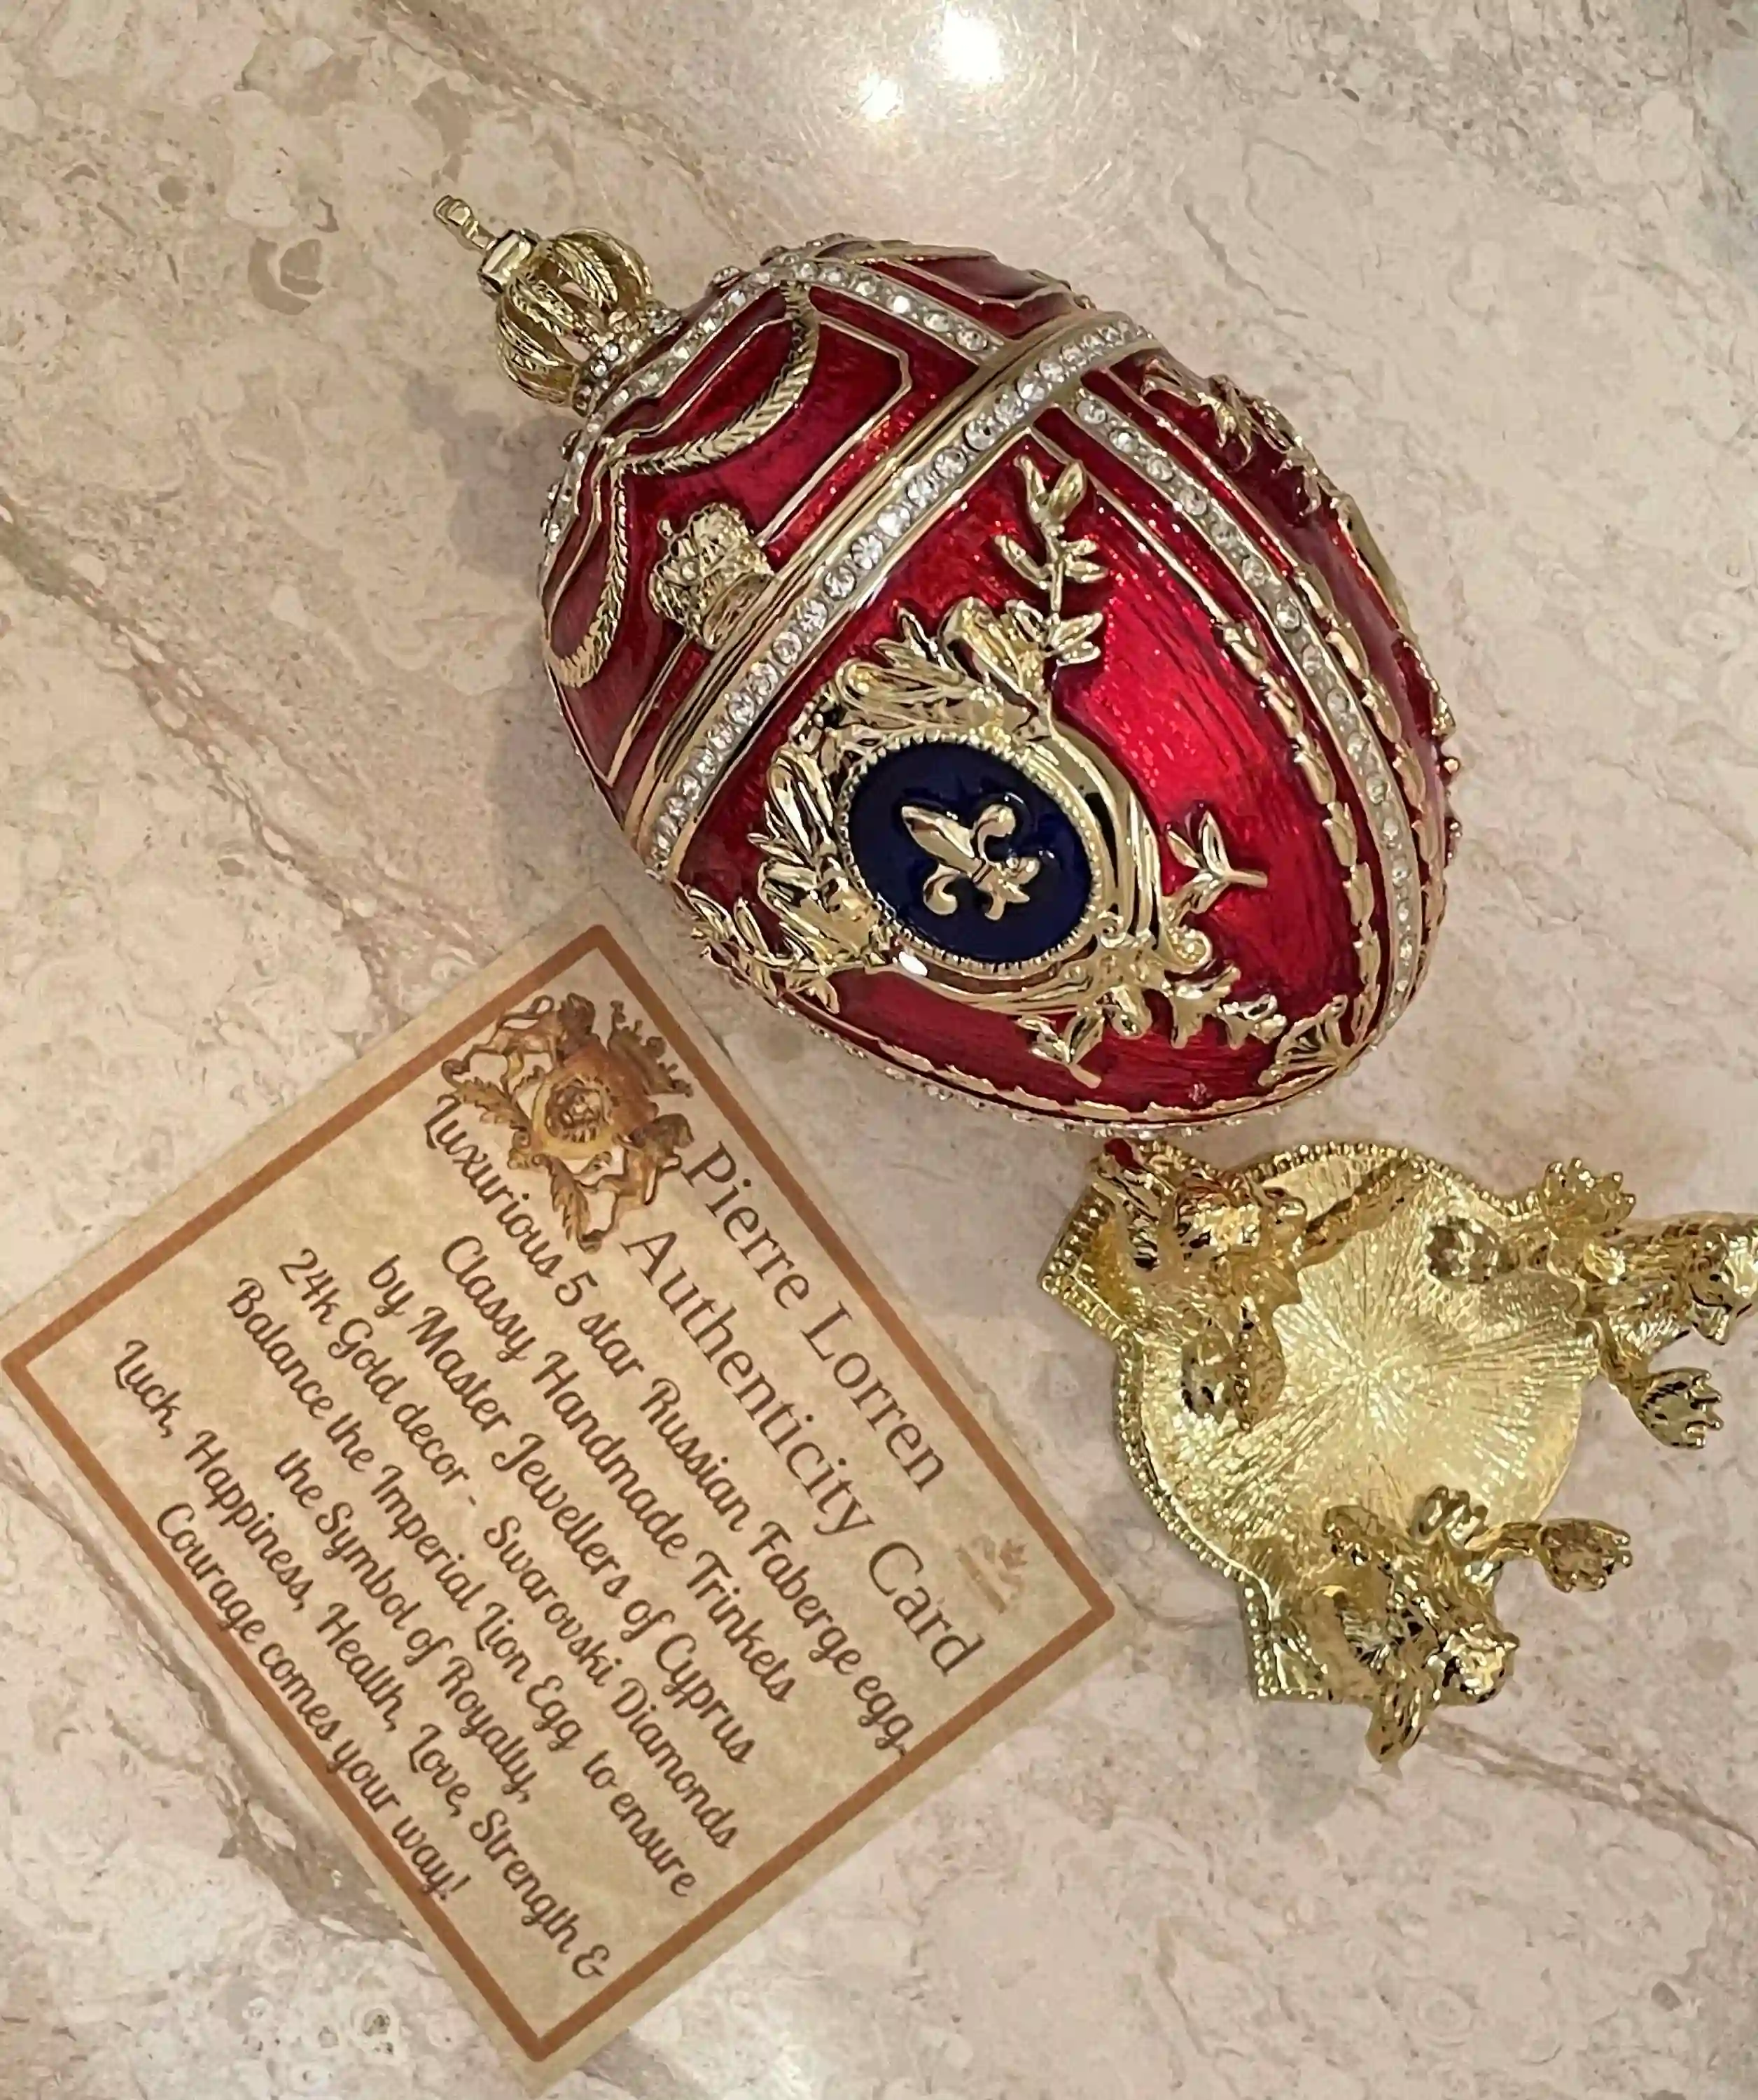 Royal 5* Faberge egg Trinket box with lid Faberge Collectibles Wedding gift Richly decorated 24kGOLD Swarvoski HANDSET Egg Fabrege style egg 